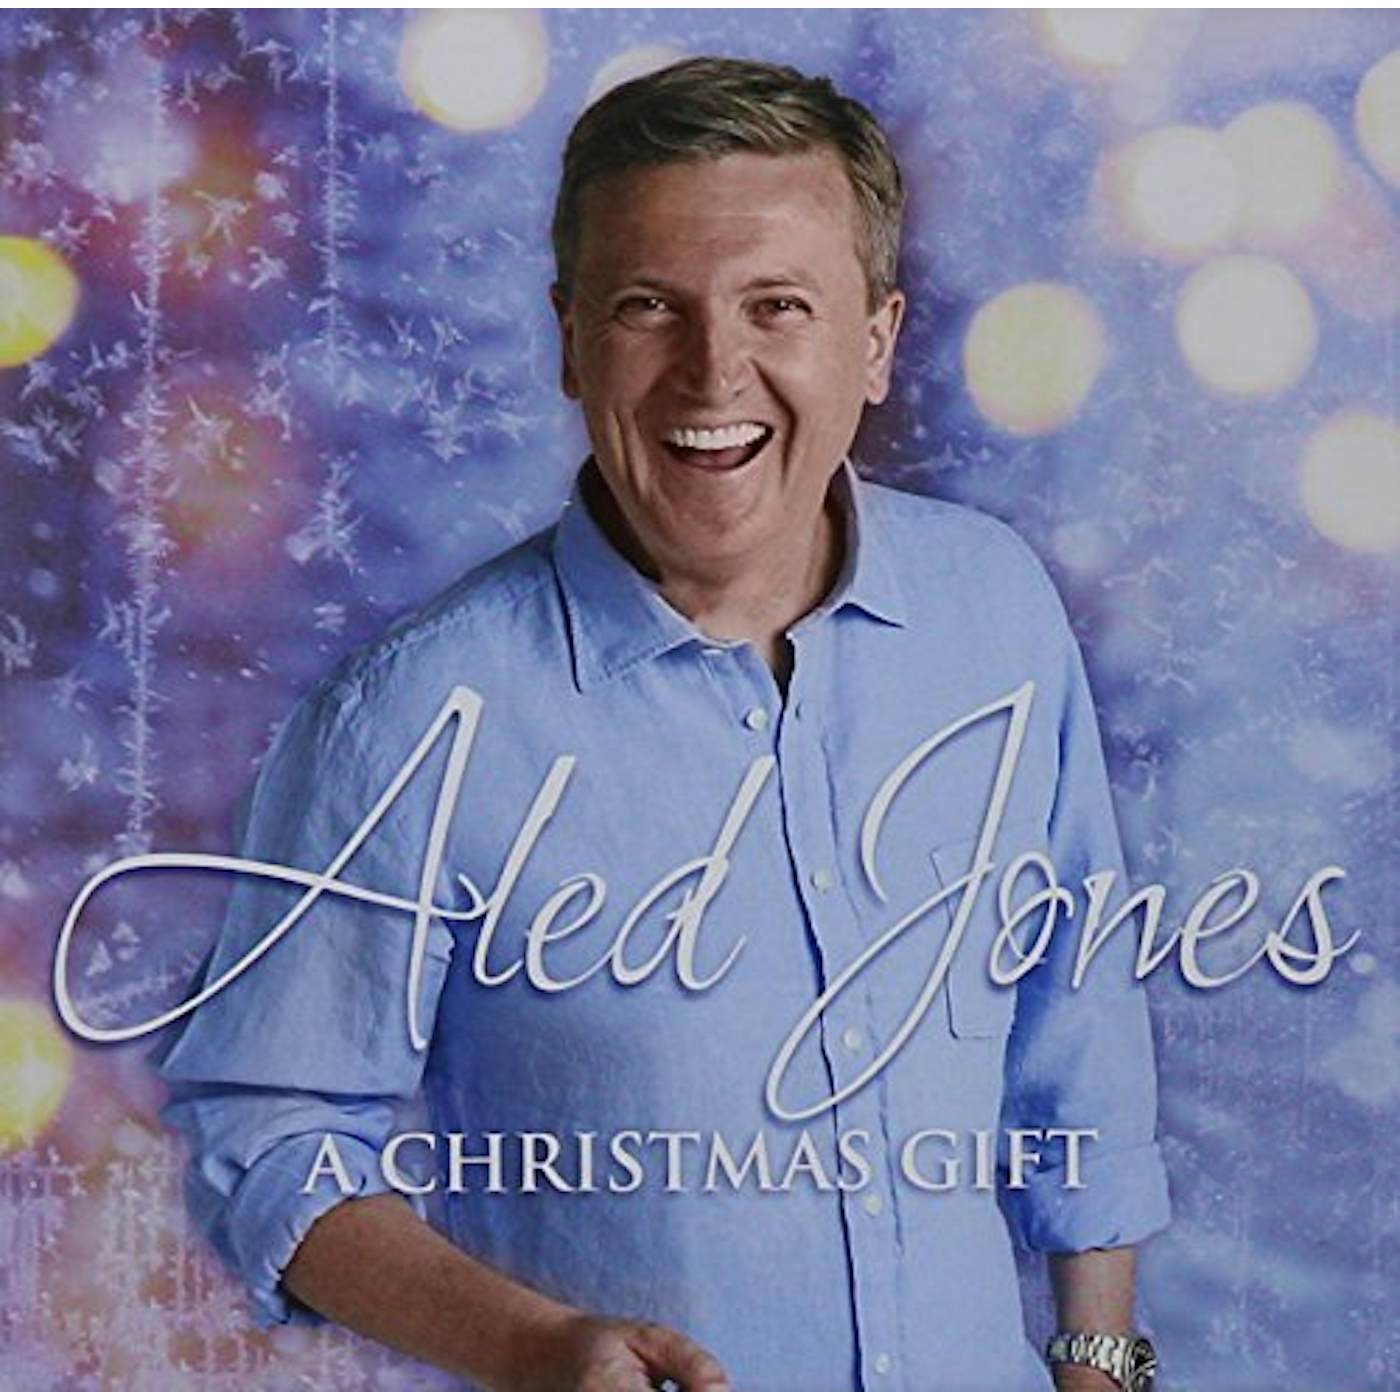 Aled Jones CHRISTMAS GIFT CD